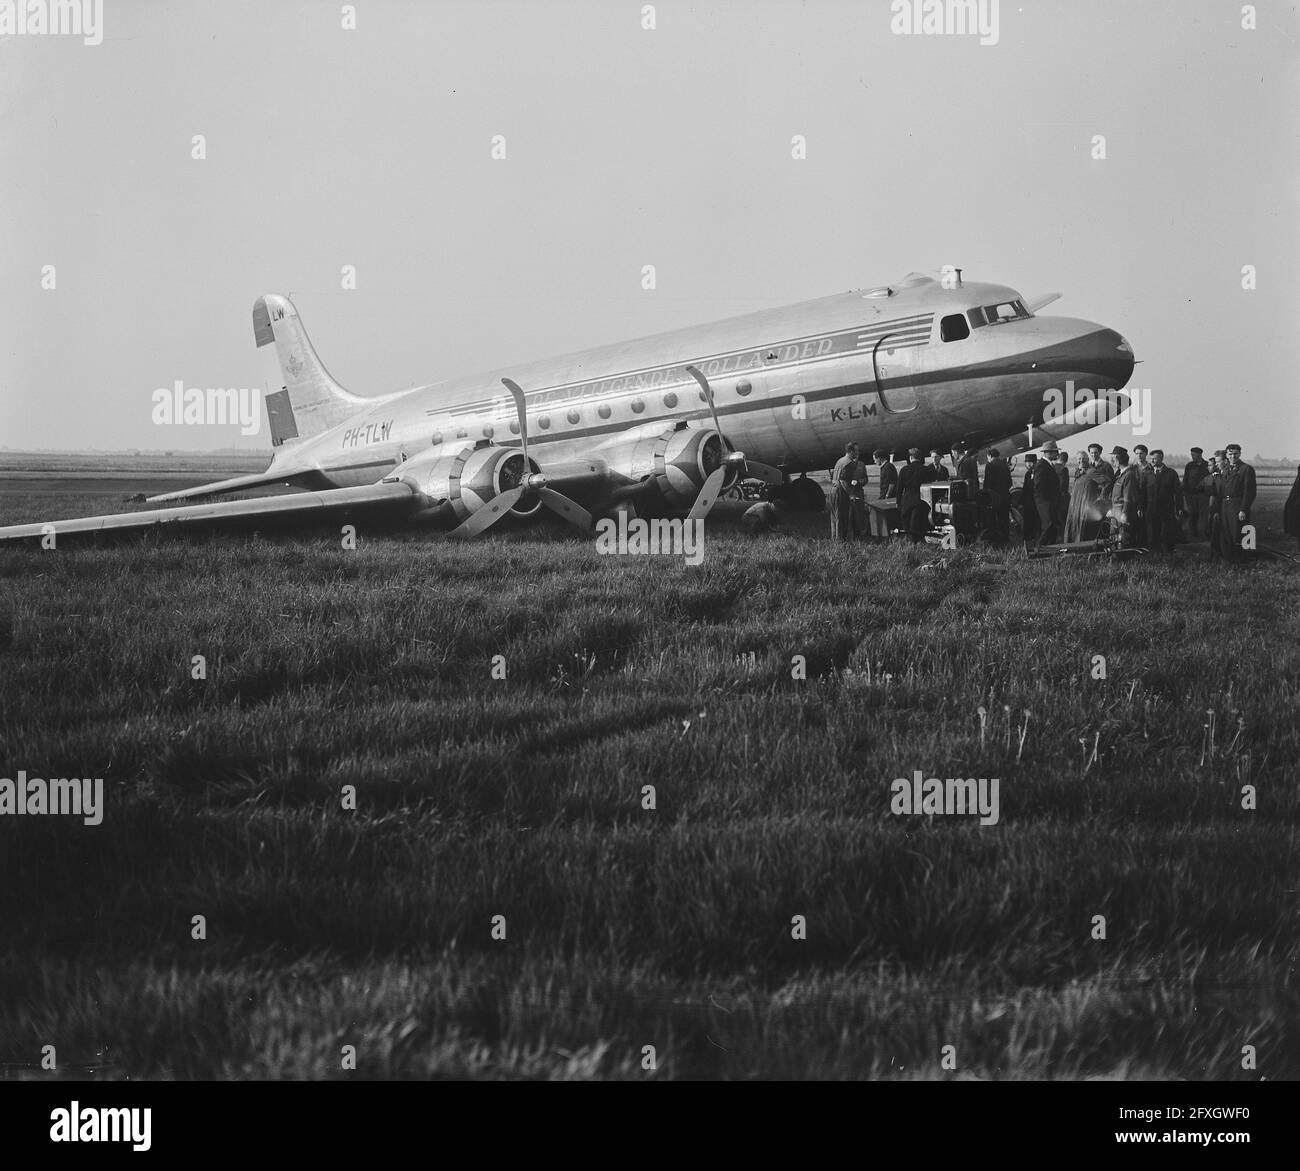 Schiphol airport plane crash plane Black and White Stock Photos ...